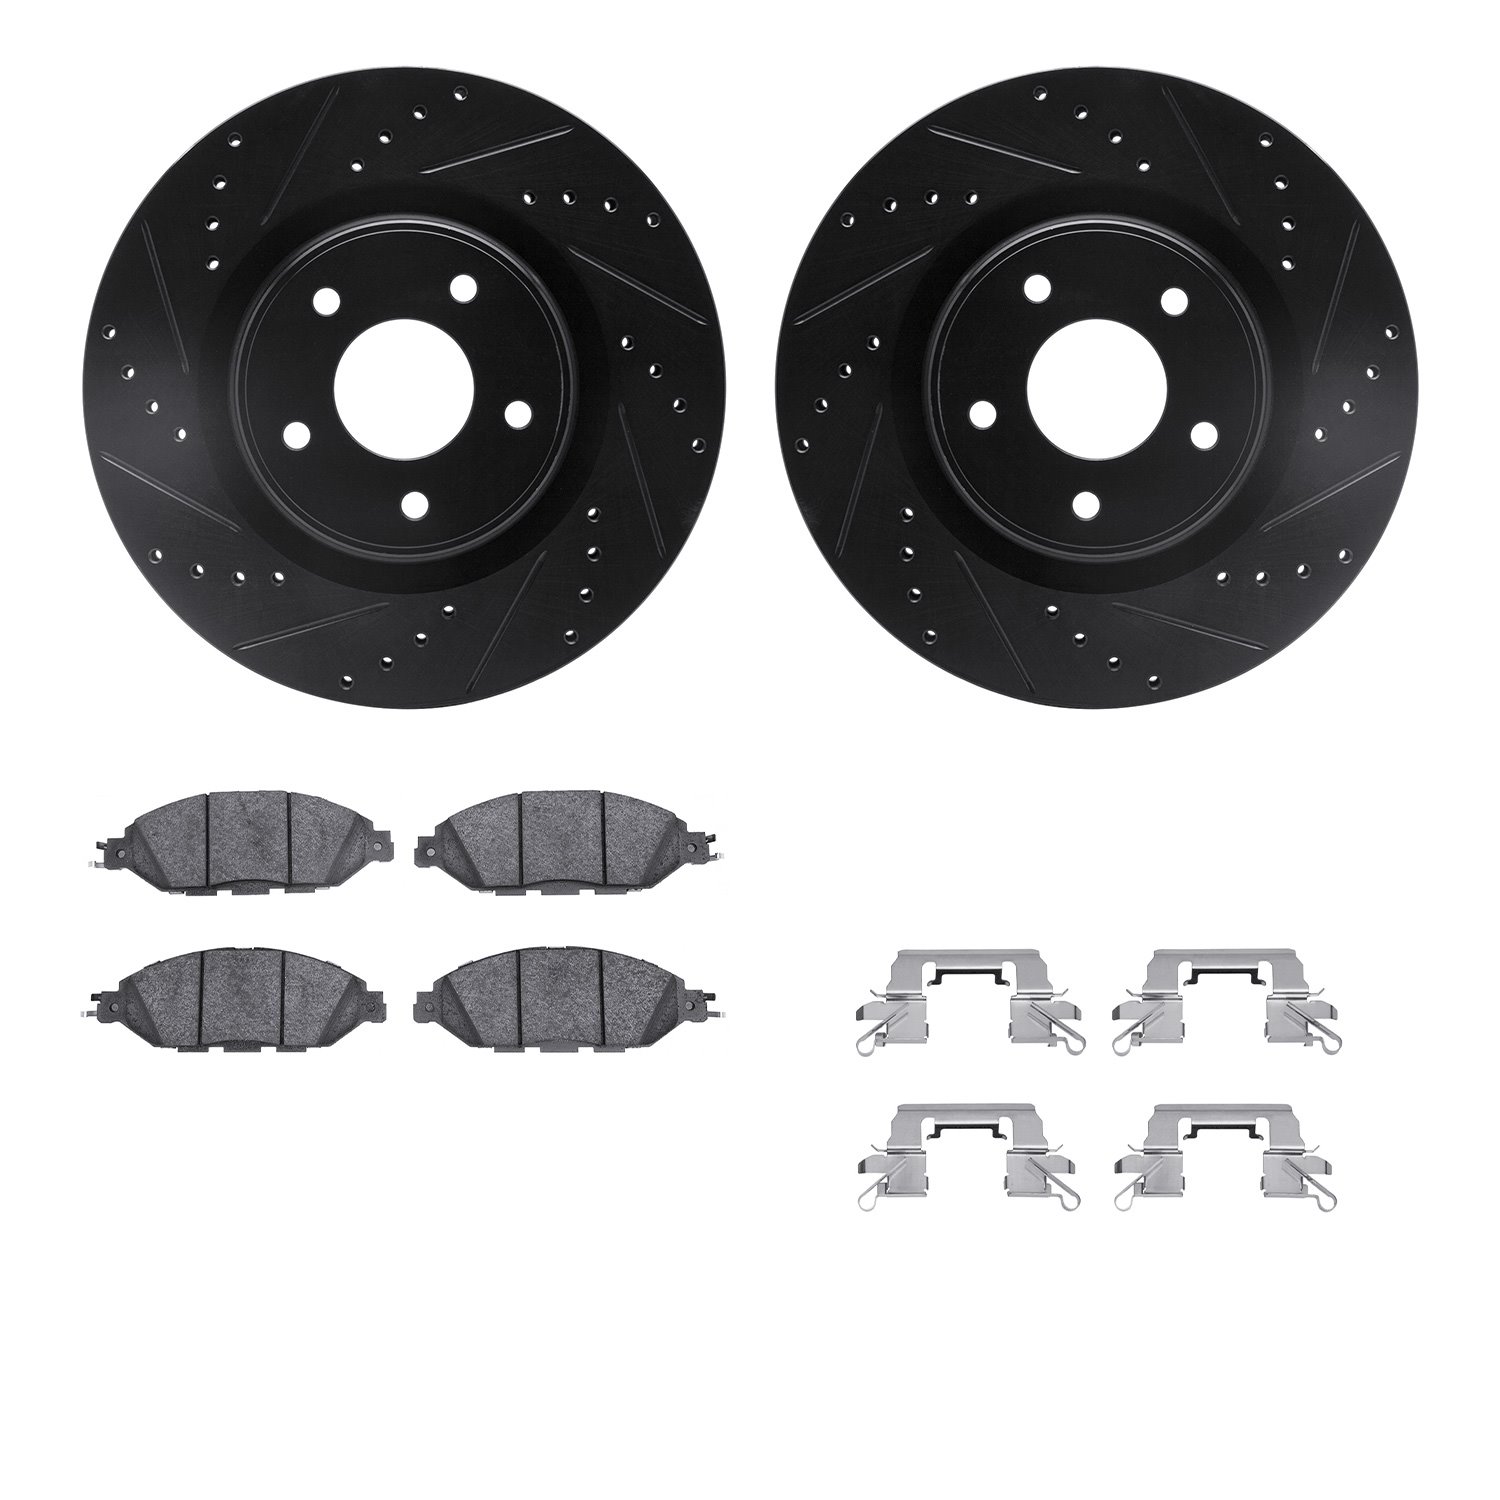 8312-67125 Drilled/Slotted Brake Rotors with 3000-Series Ceramic Brake Pads Kit & Hardware [Black], Fits Select Infiniti/Nissan,